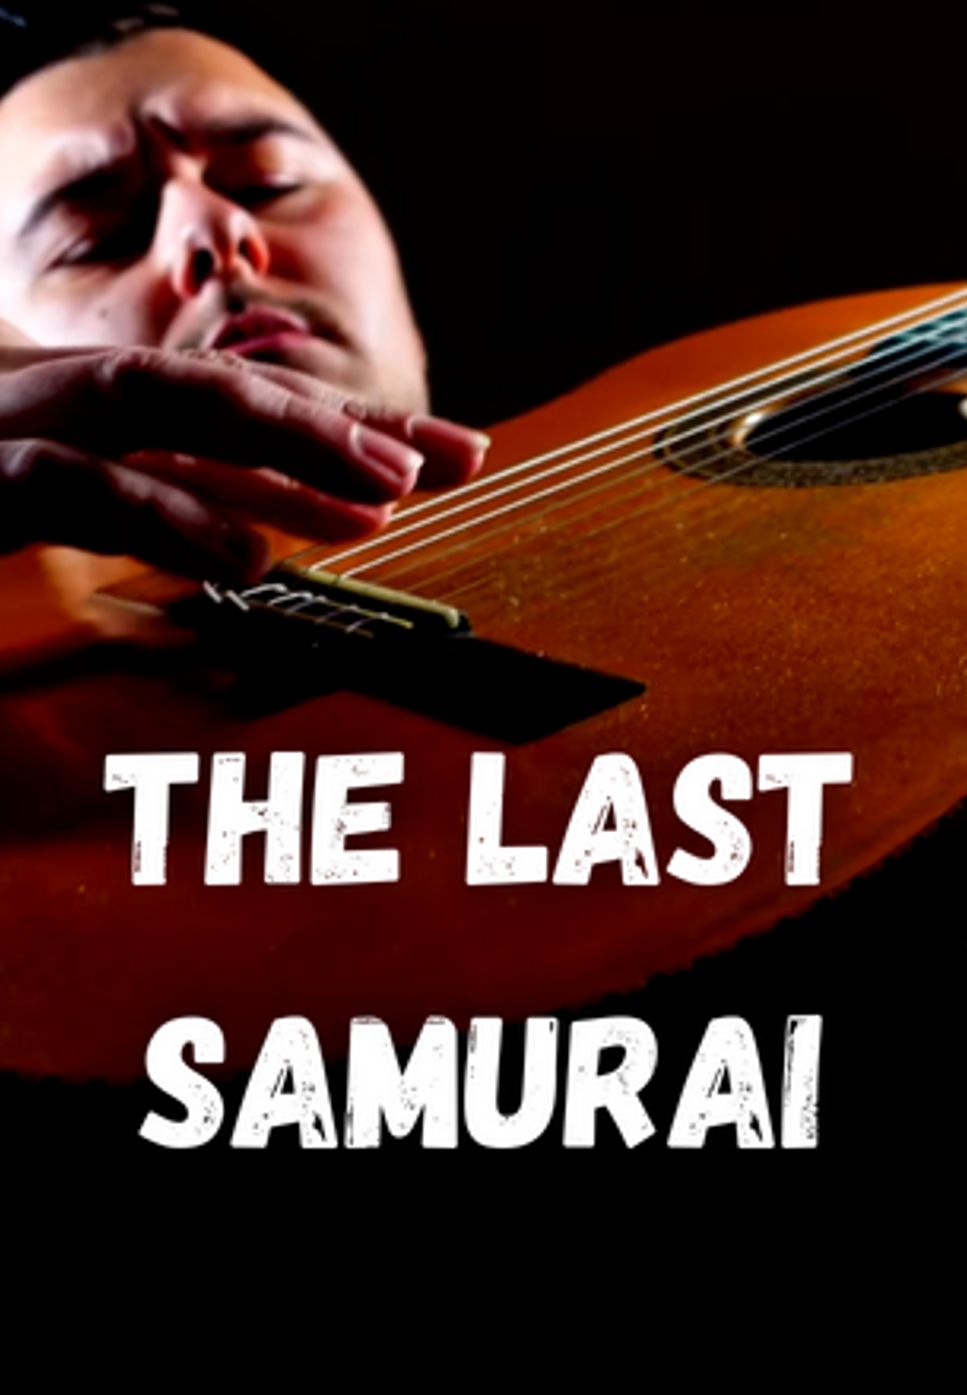 Hans Zimmer - The Last Samurai by Sotiris Athanasiou